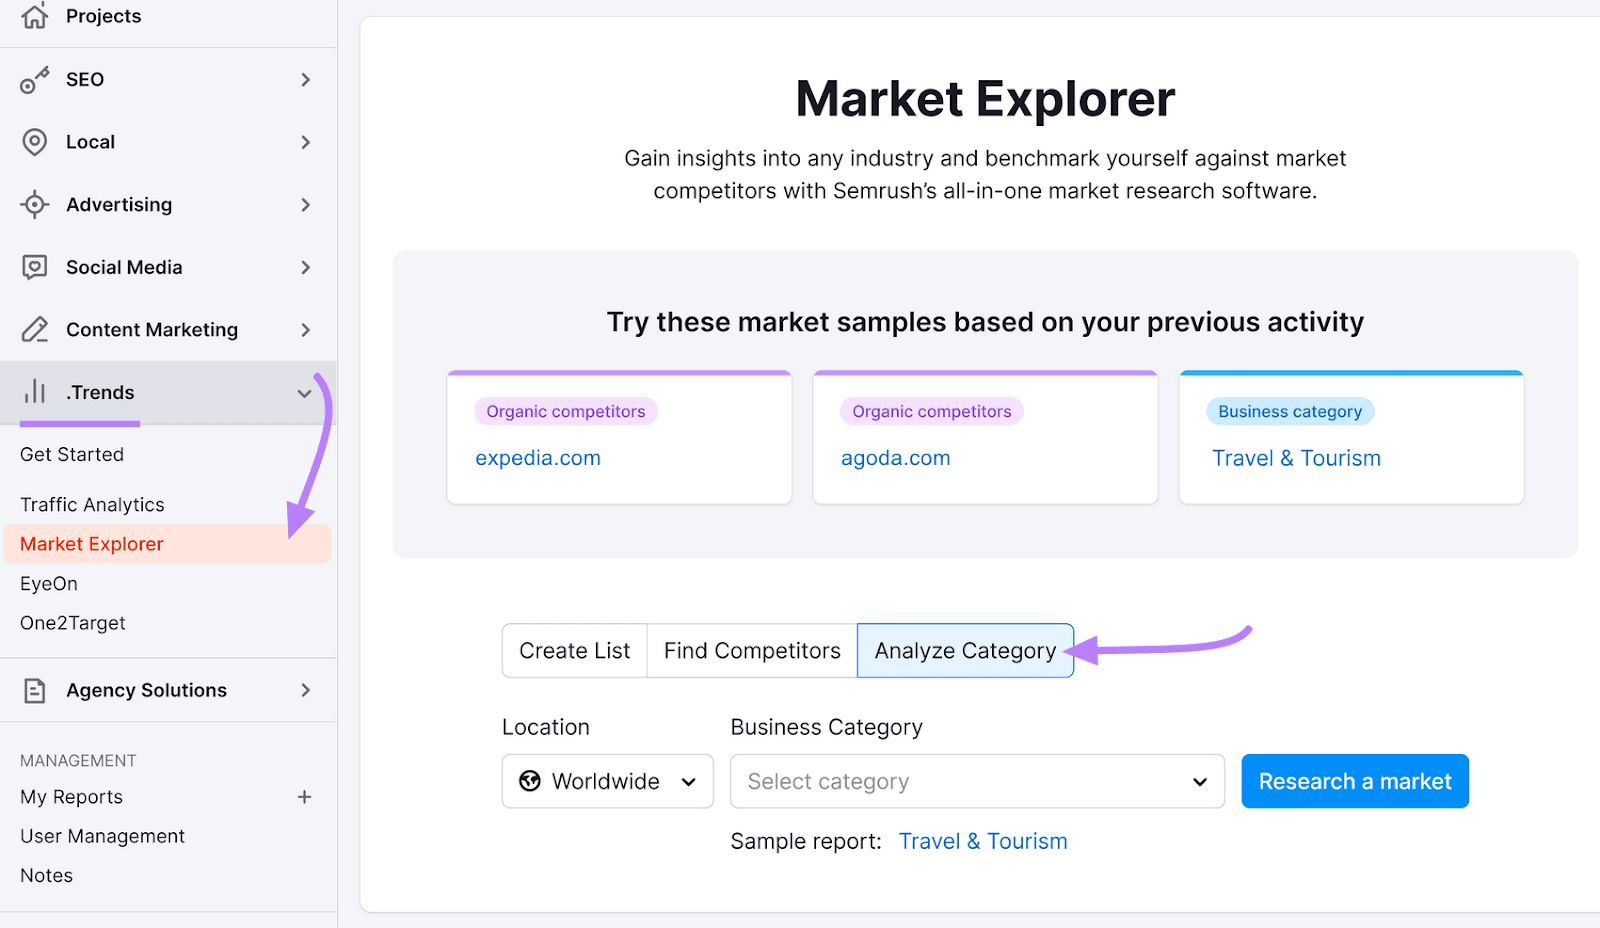 Semrush’s Market Explorer tool